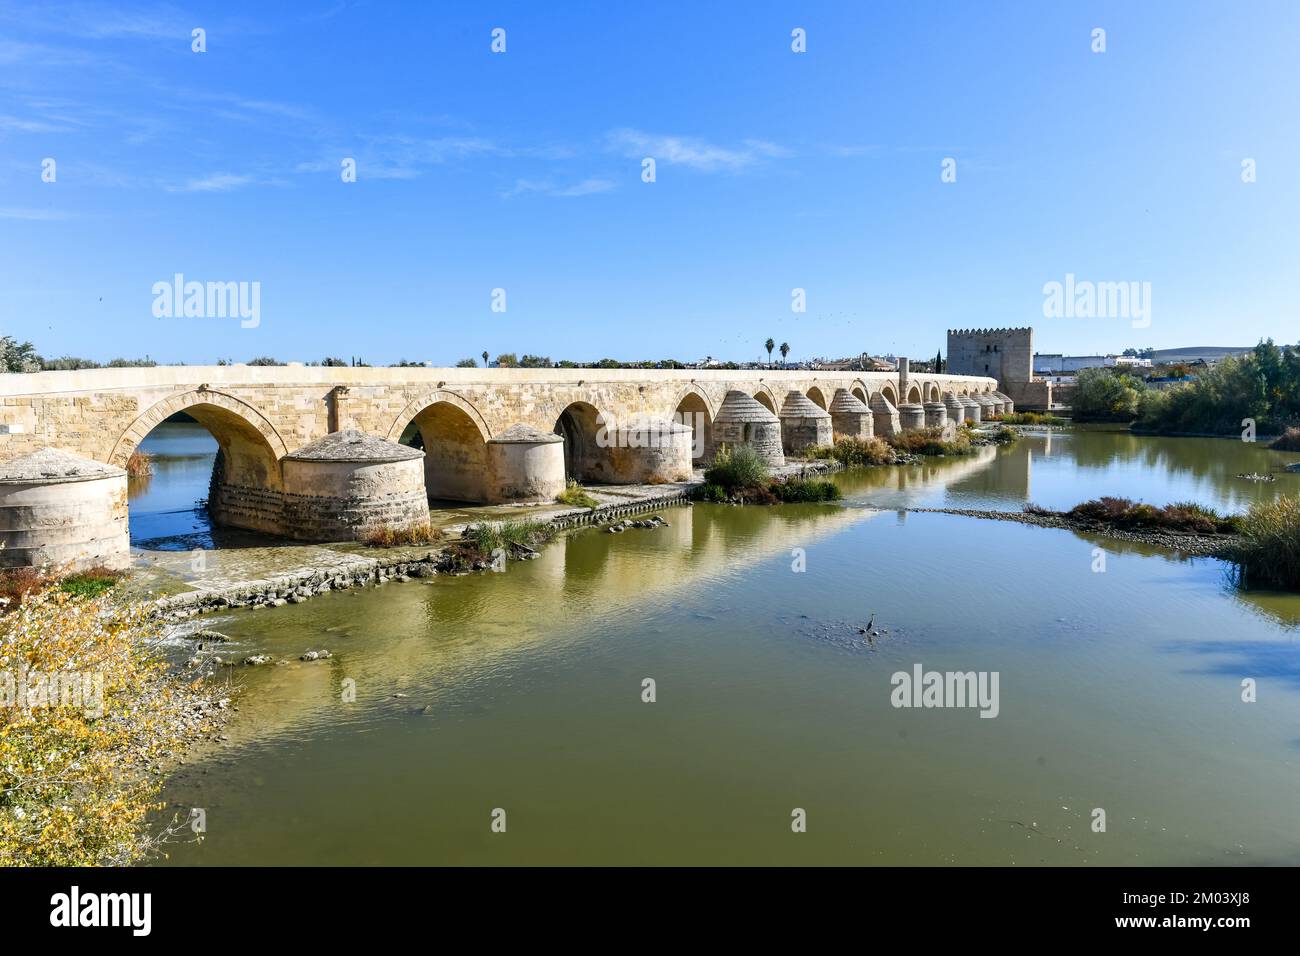 View of the Roman Bridge, a stone bridge that spans the river Guadalquivir in Cordoba, Spain. Stock Photo